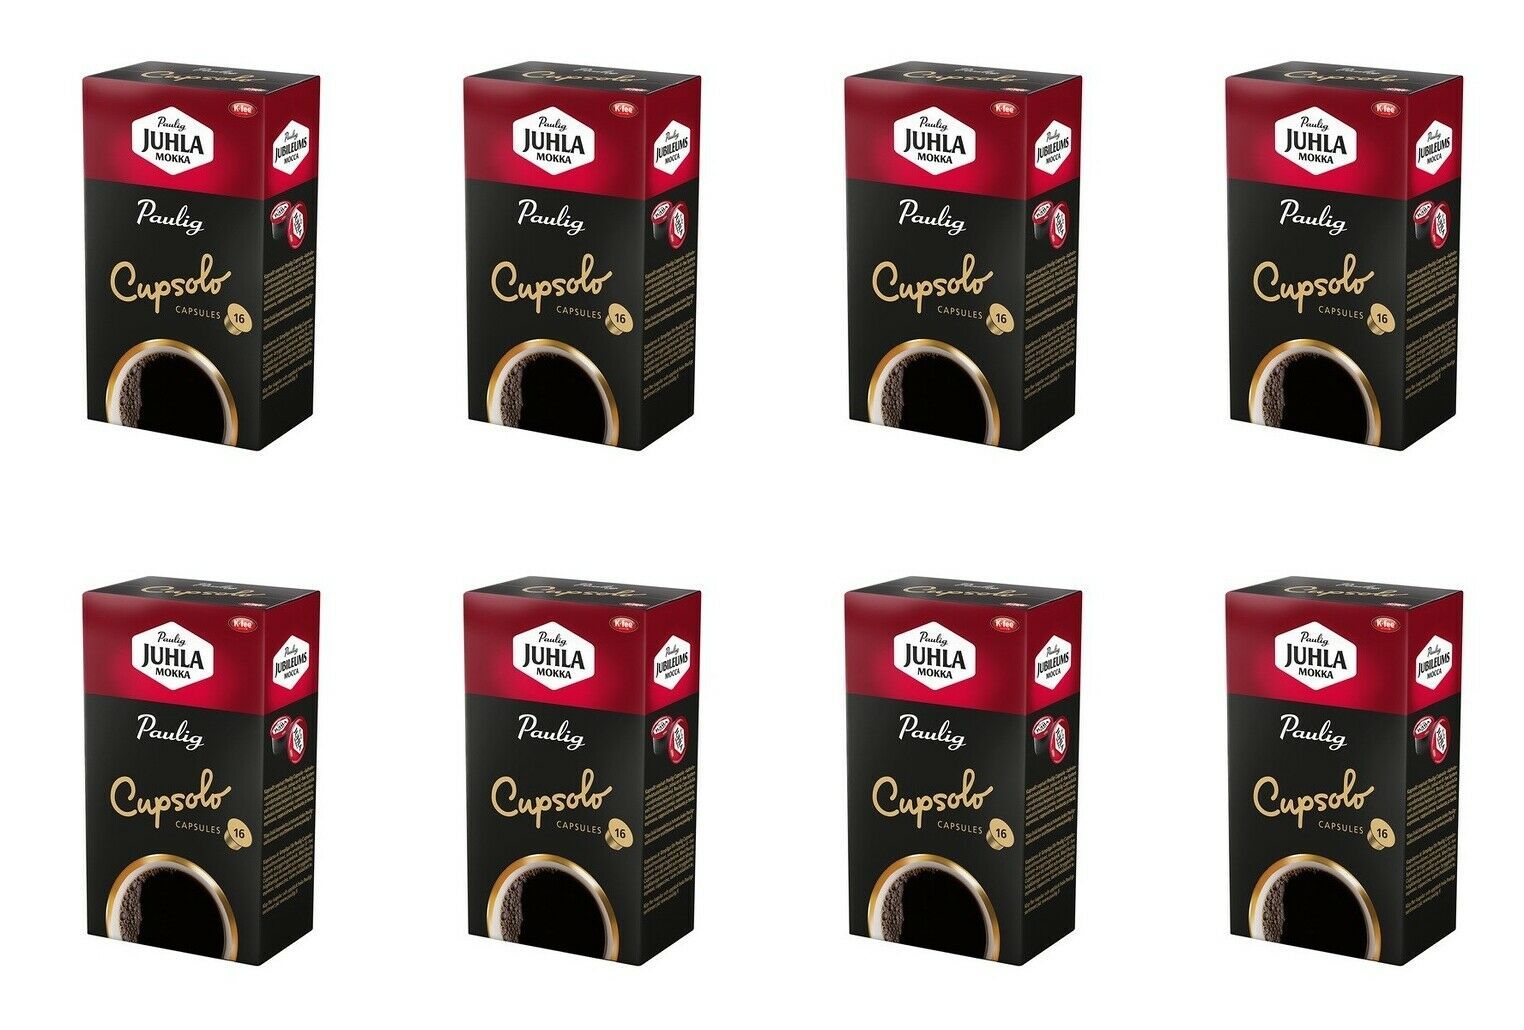 Paulig Juhla Mokka Cupsolo Coffee 8 Packs of 136g 50.4oz - $108.90